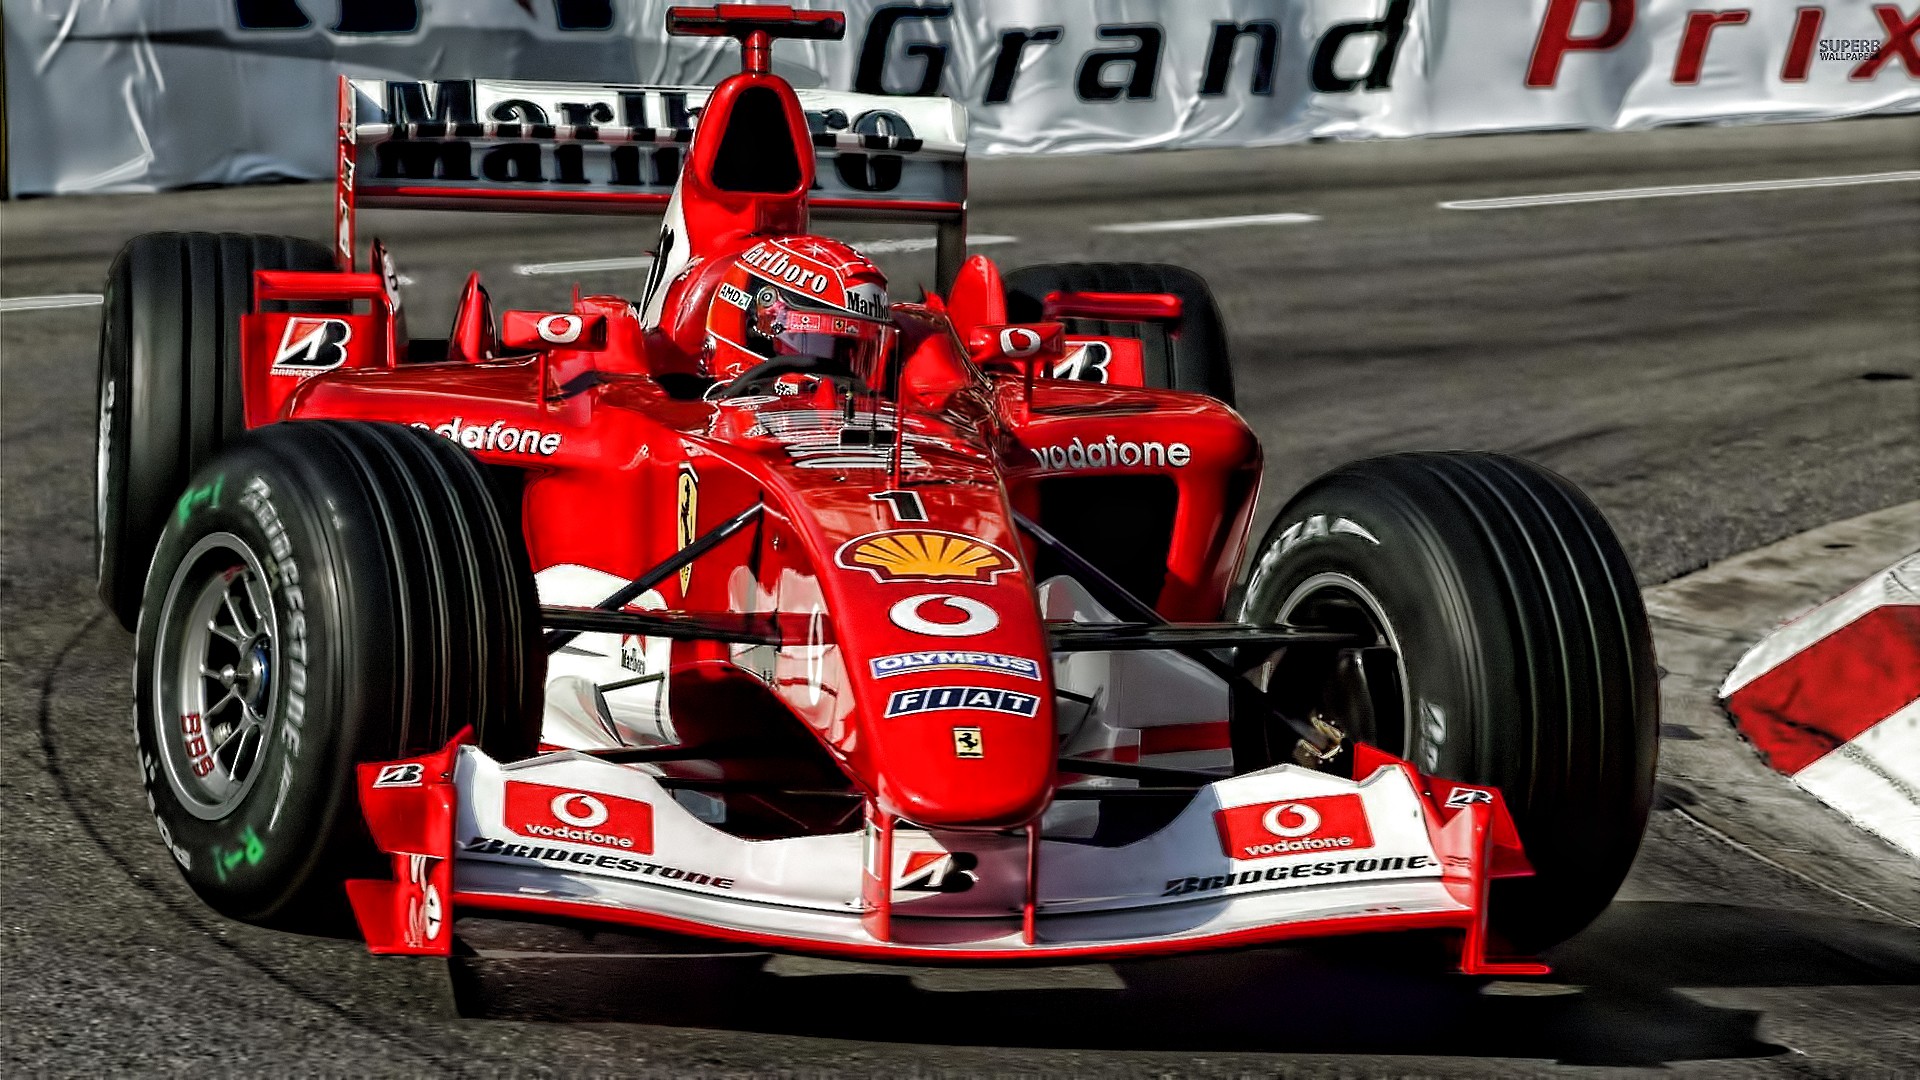 General 1920x1080 Formula 1 Ferrari F1 Michael Schumacher Monaco car red cars vehicle motorsport sport racing livery Racing driver